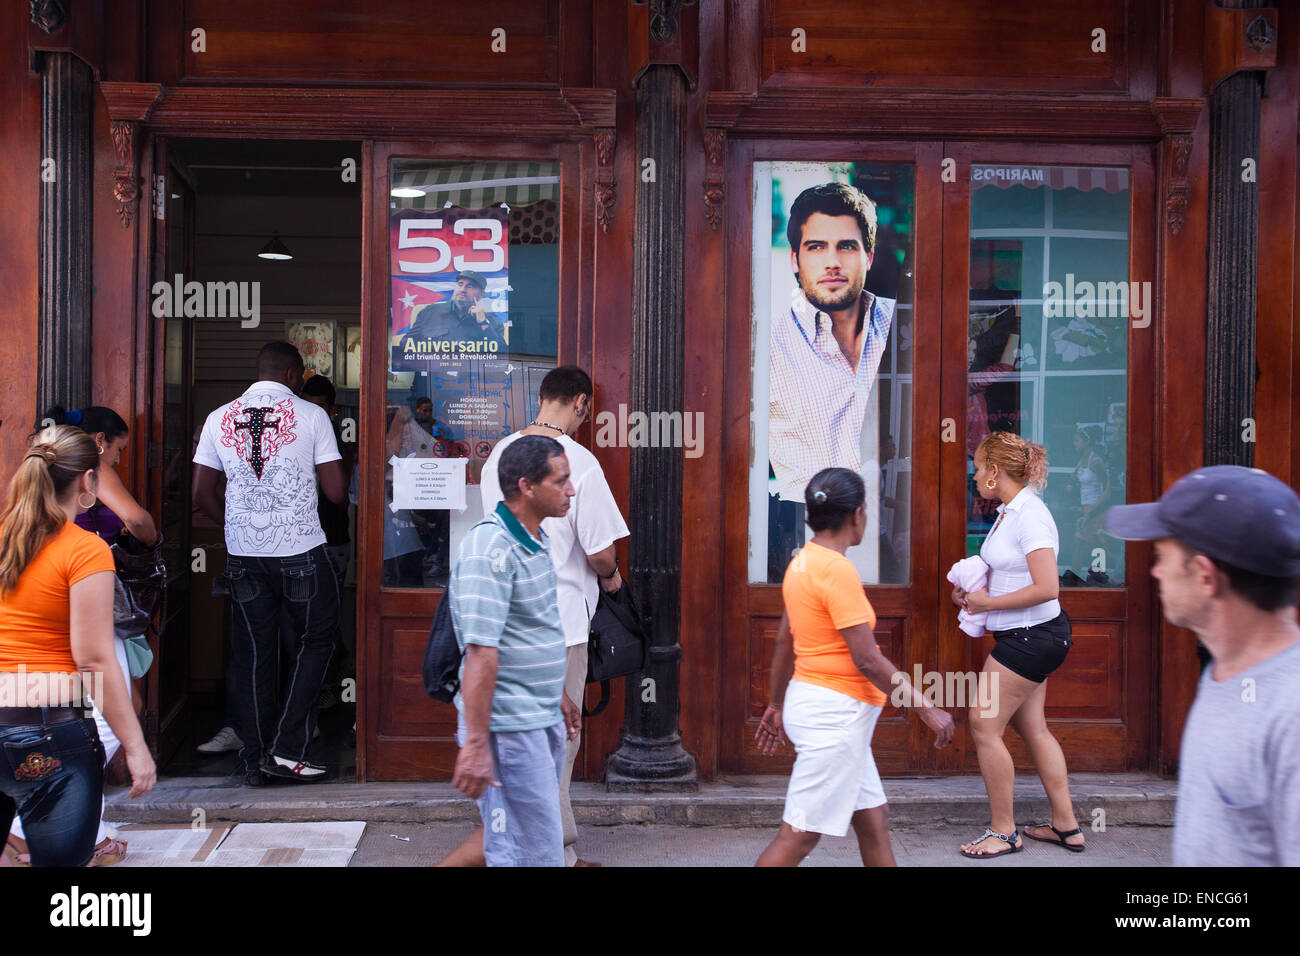 A store front in Havana, Cuba. Stock Photo